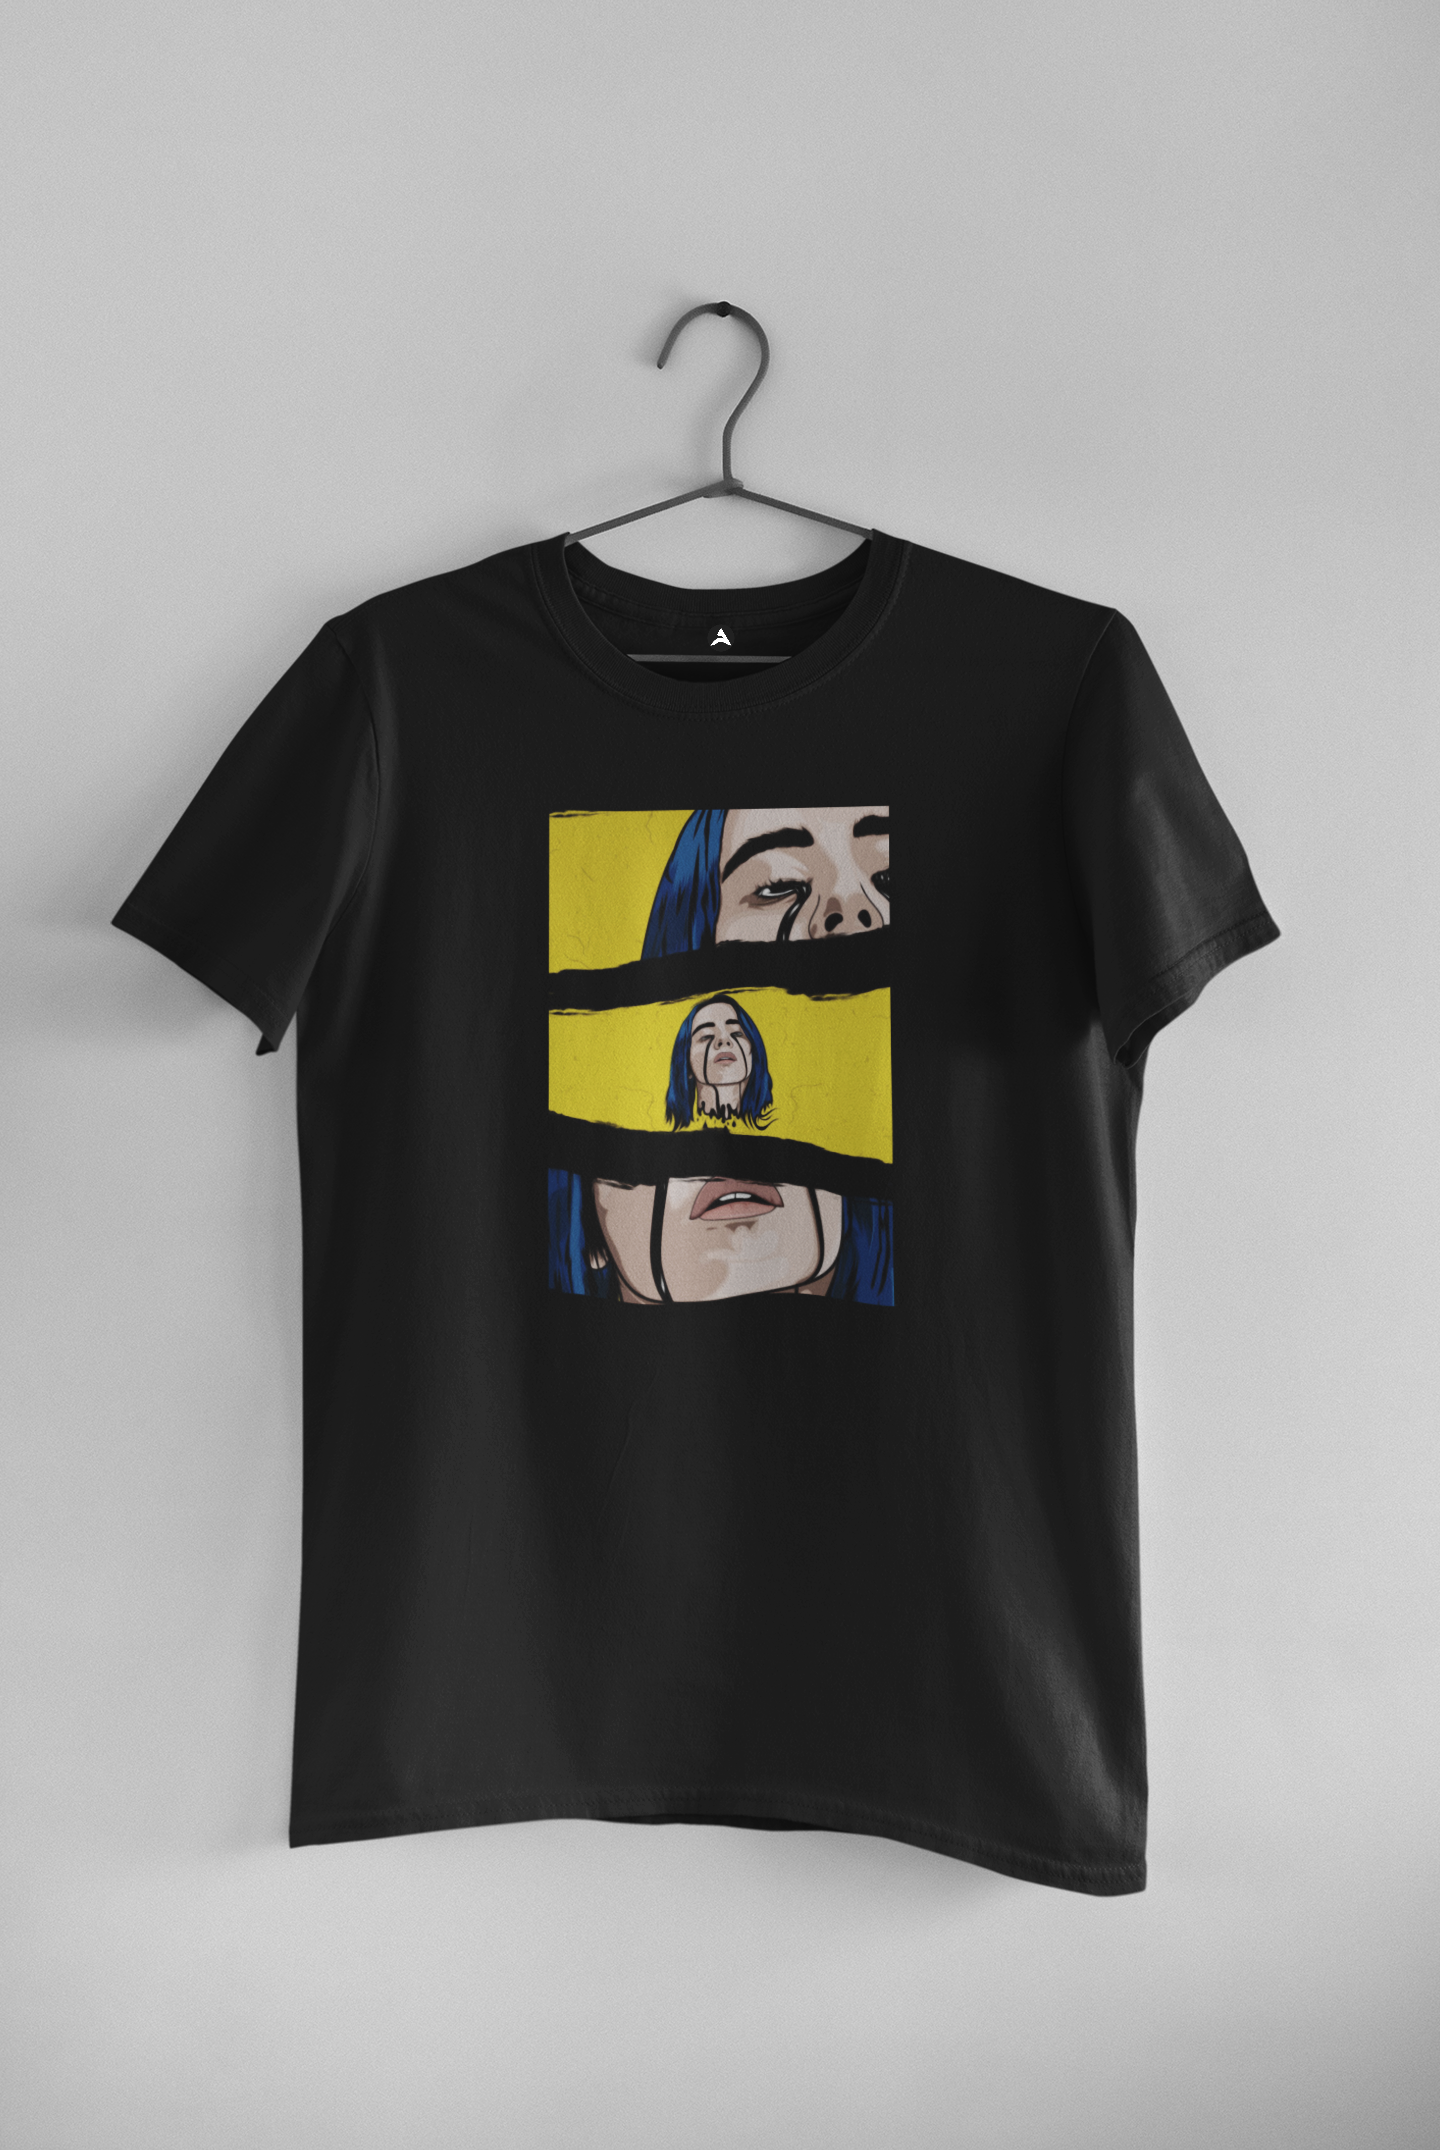 I could lie, say I like it like that: Billie Eilish (Double Sided Print): Aesthetic - Half Sleeve T-Shirts BLACK